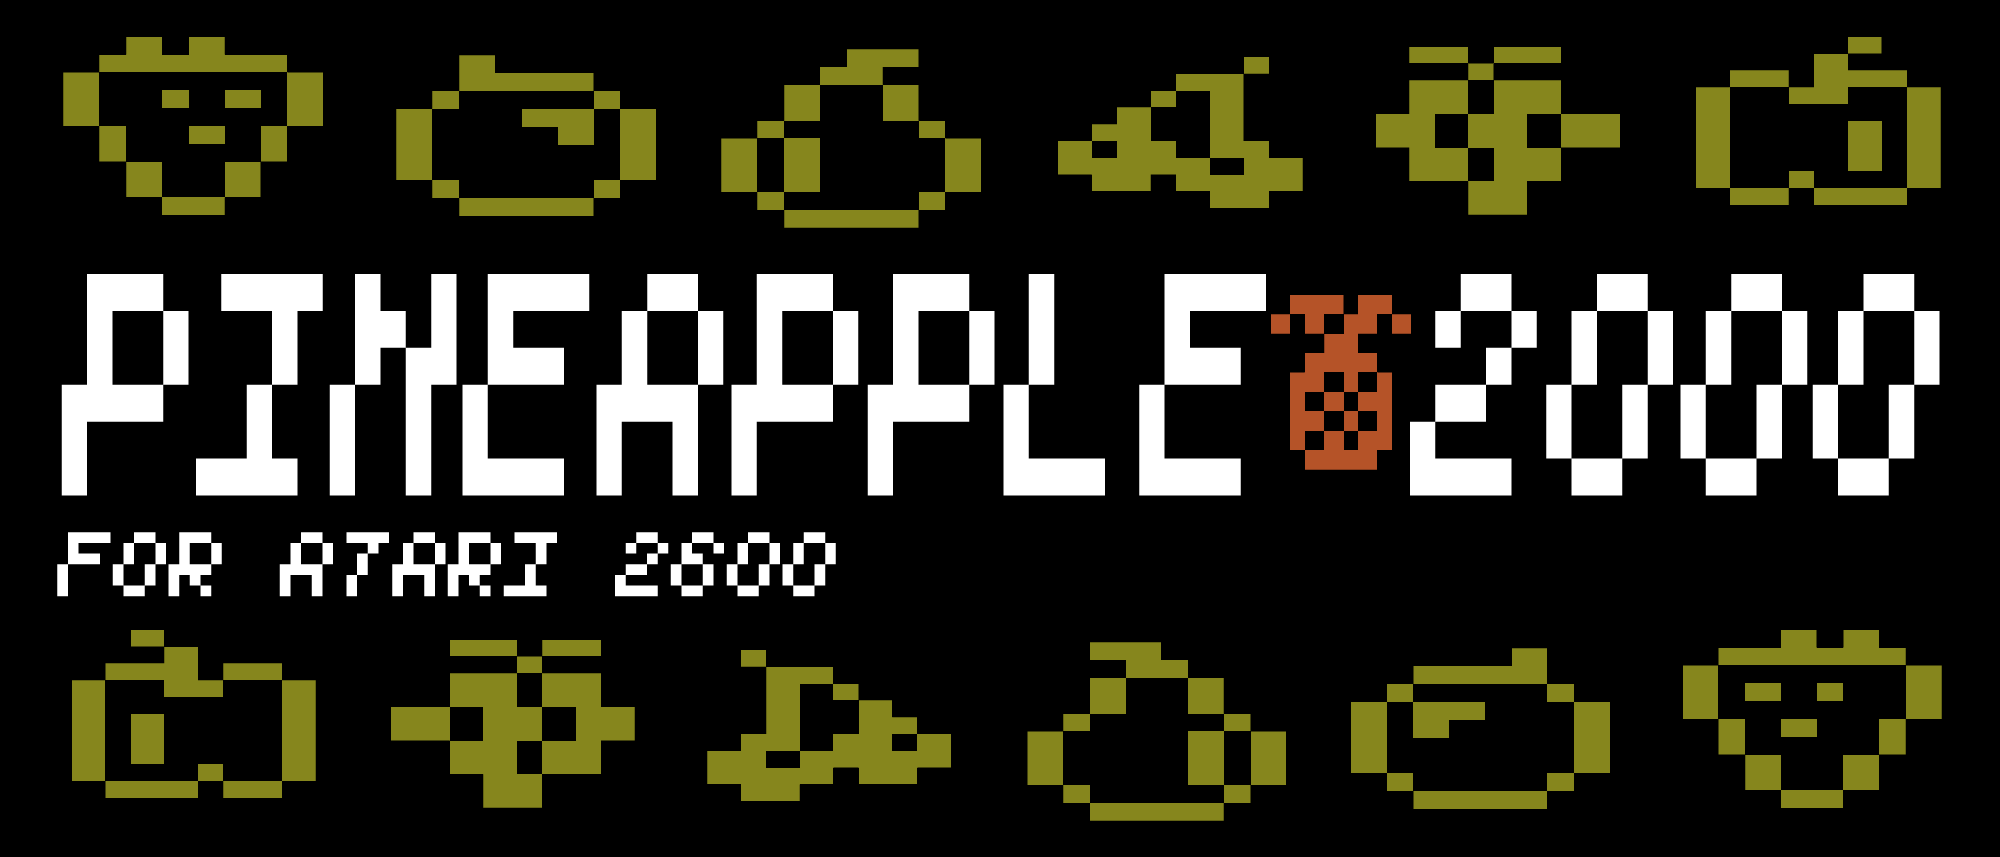 Pineapple 2000 (Atari 2600)